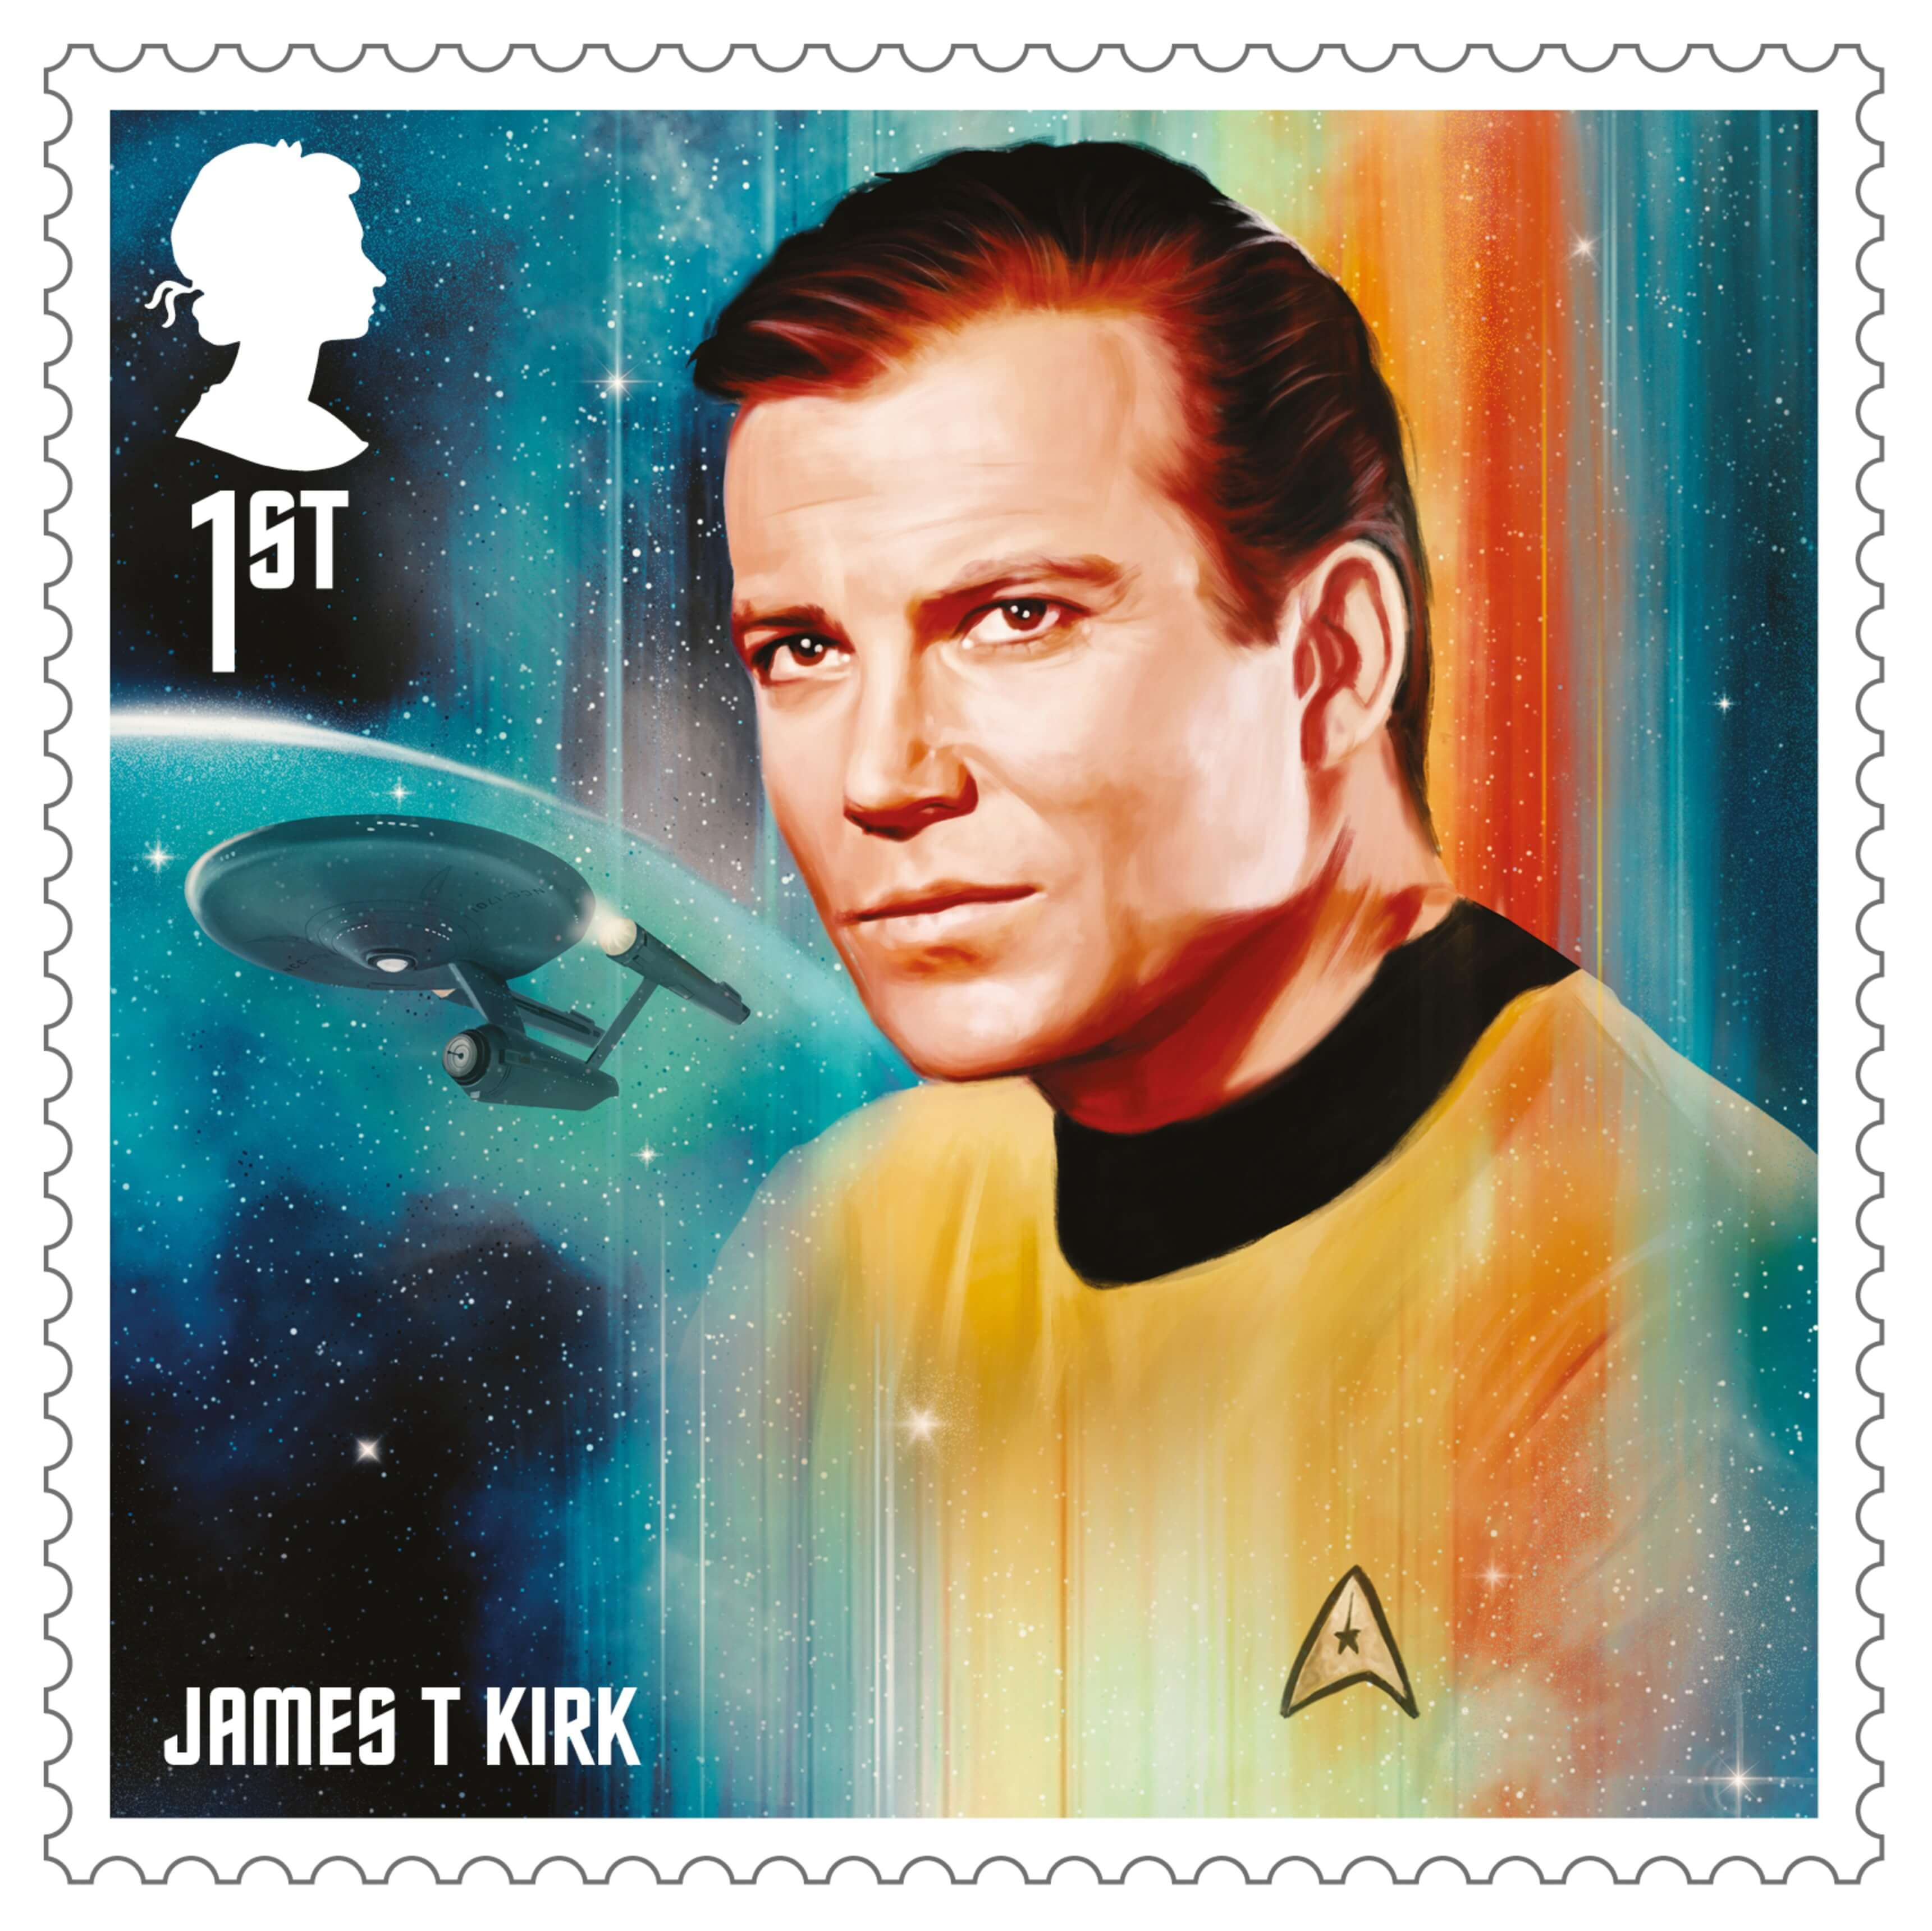 star trek postage stamps uk